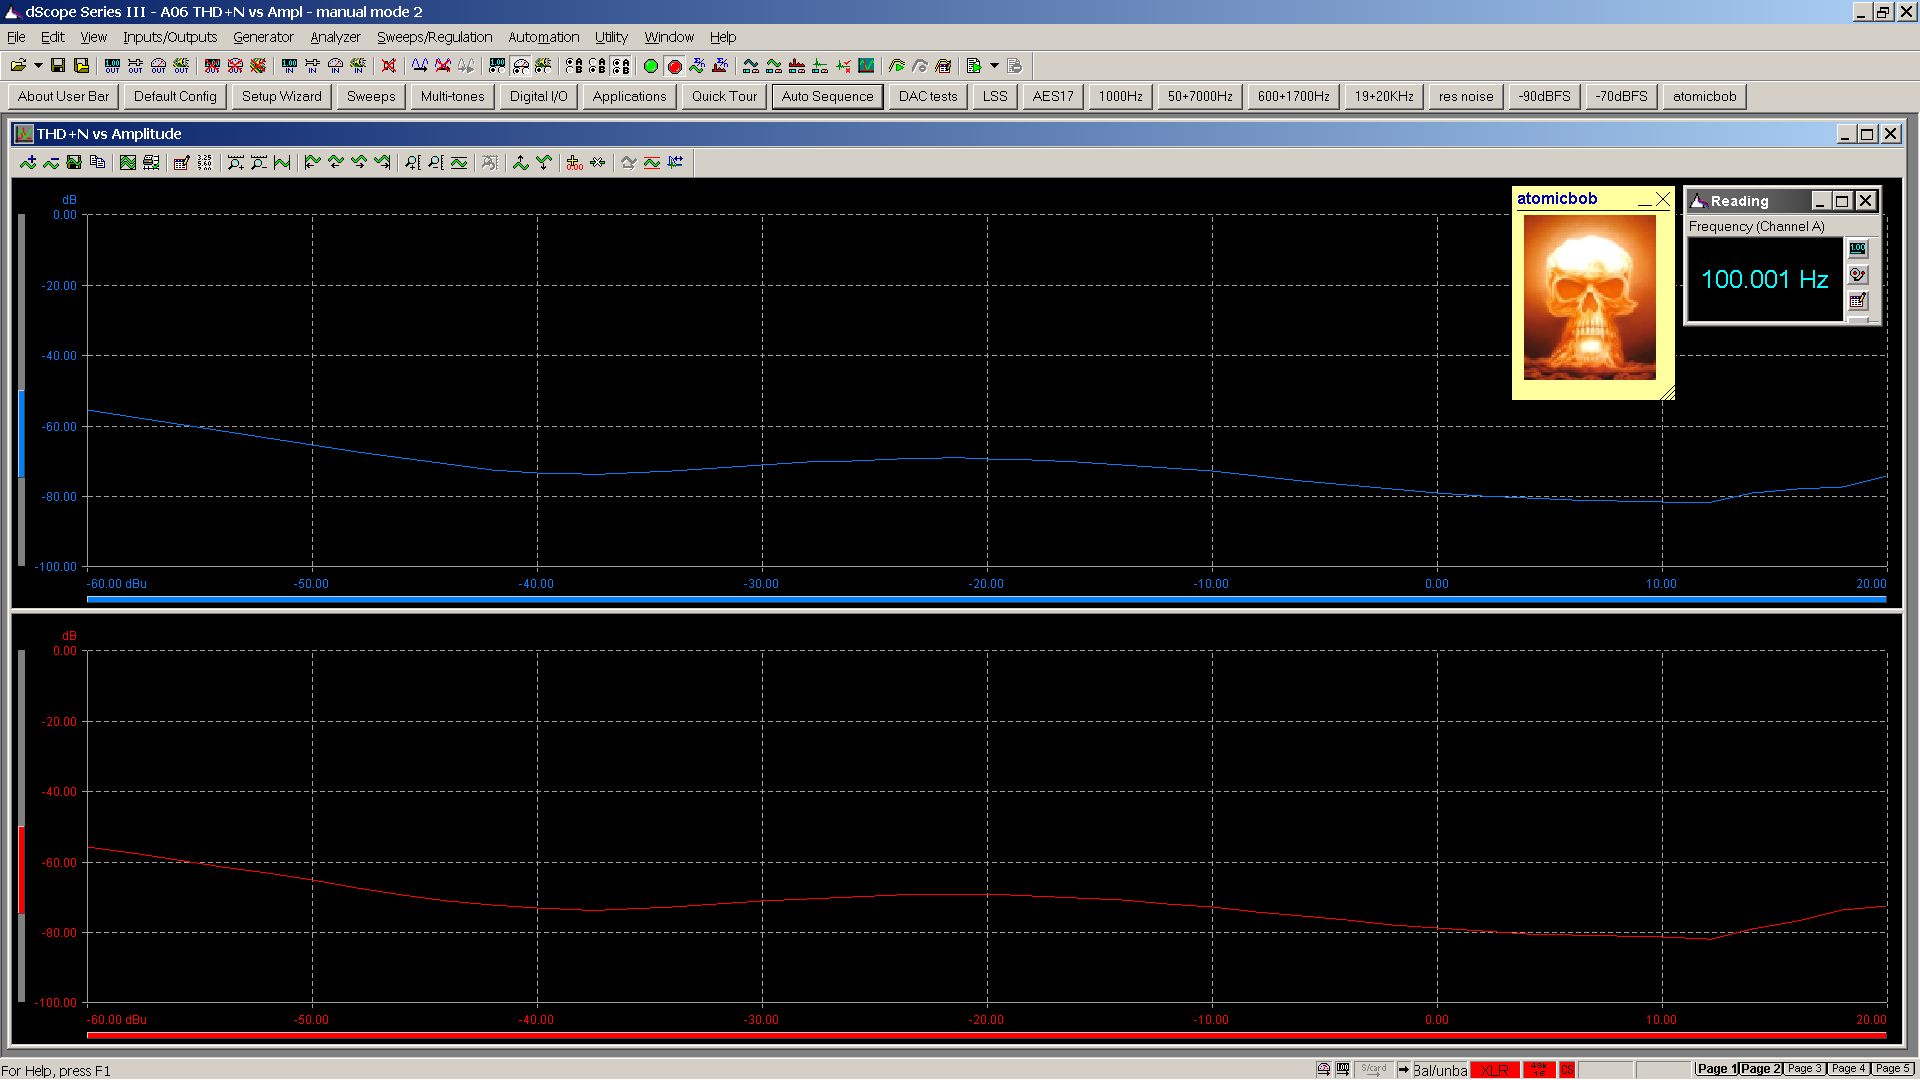 20181030 ISO Twin 100 Hz THD+N vs Amplitude 100K - v2.png